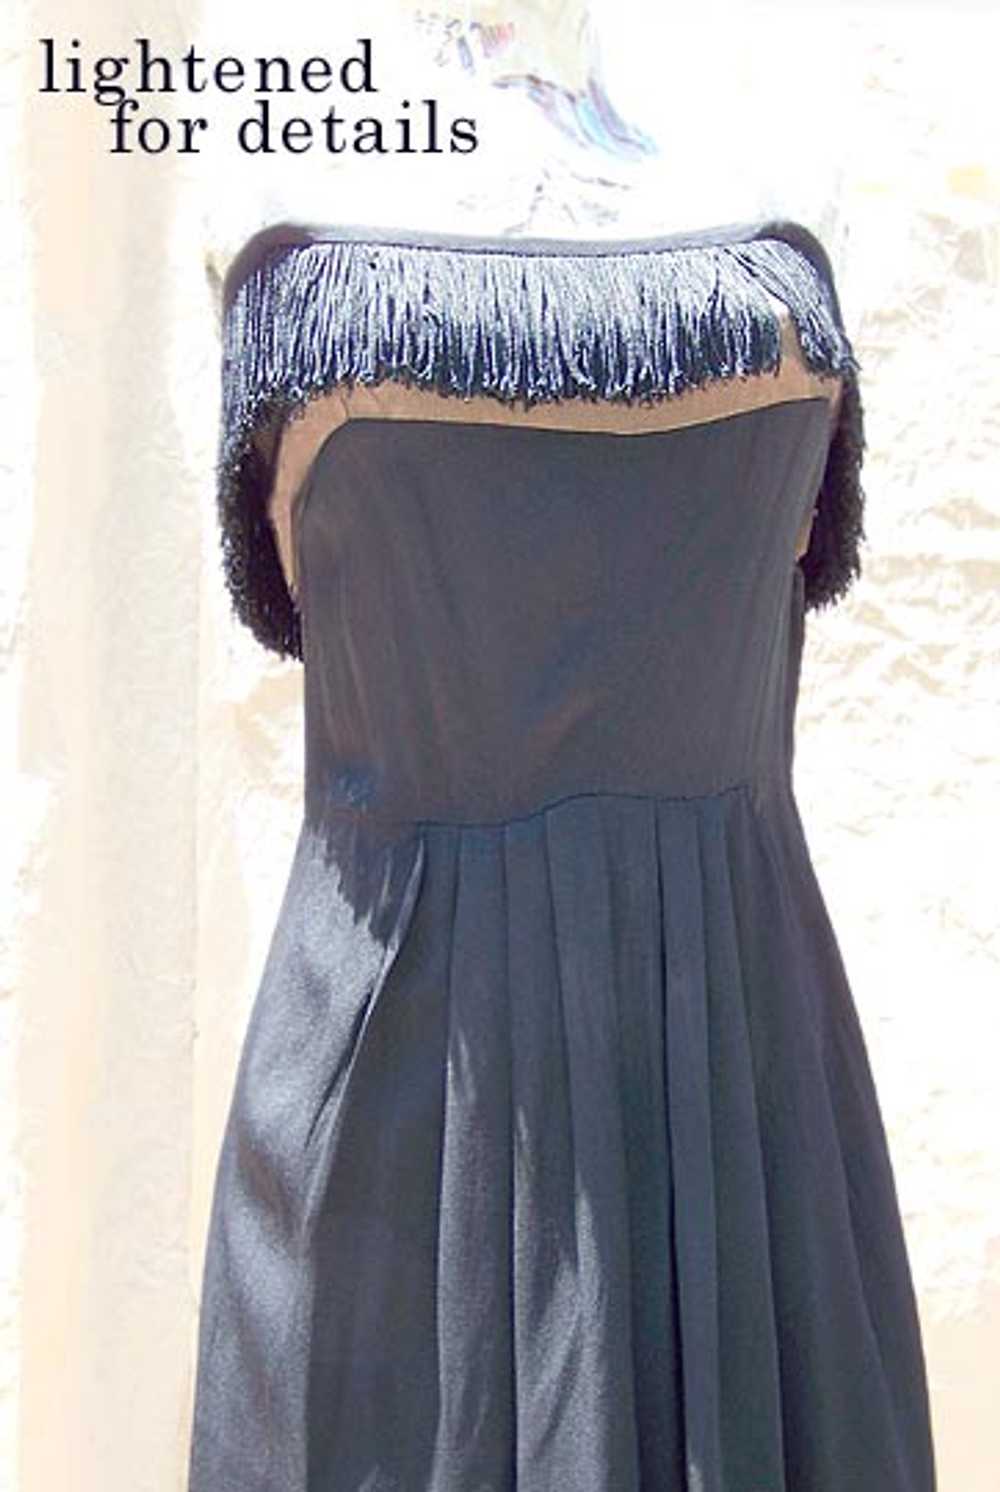 Fringe & net gown - image 8